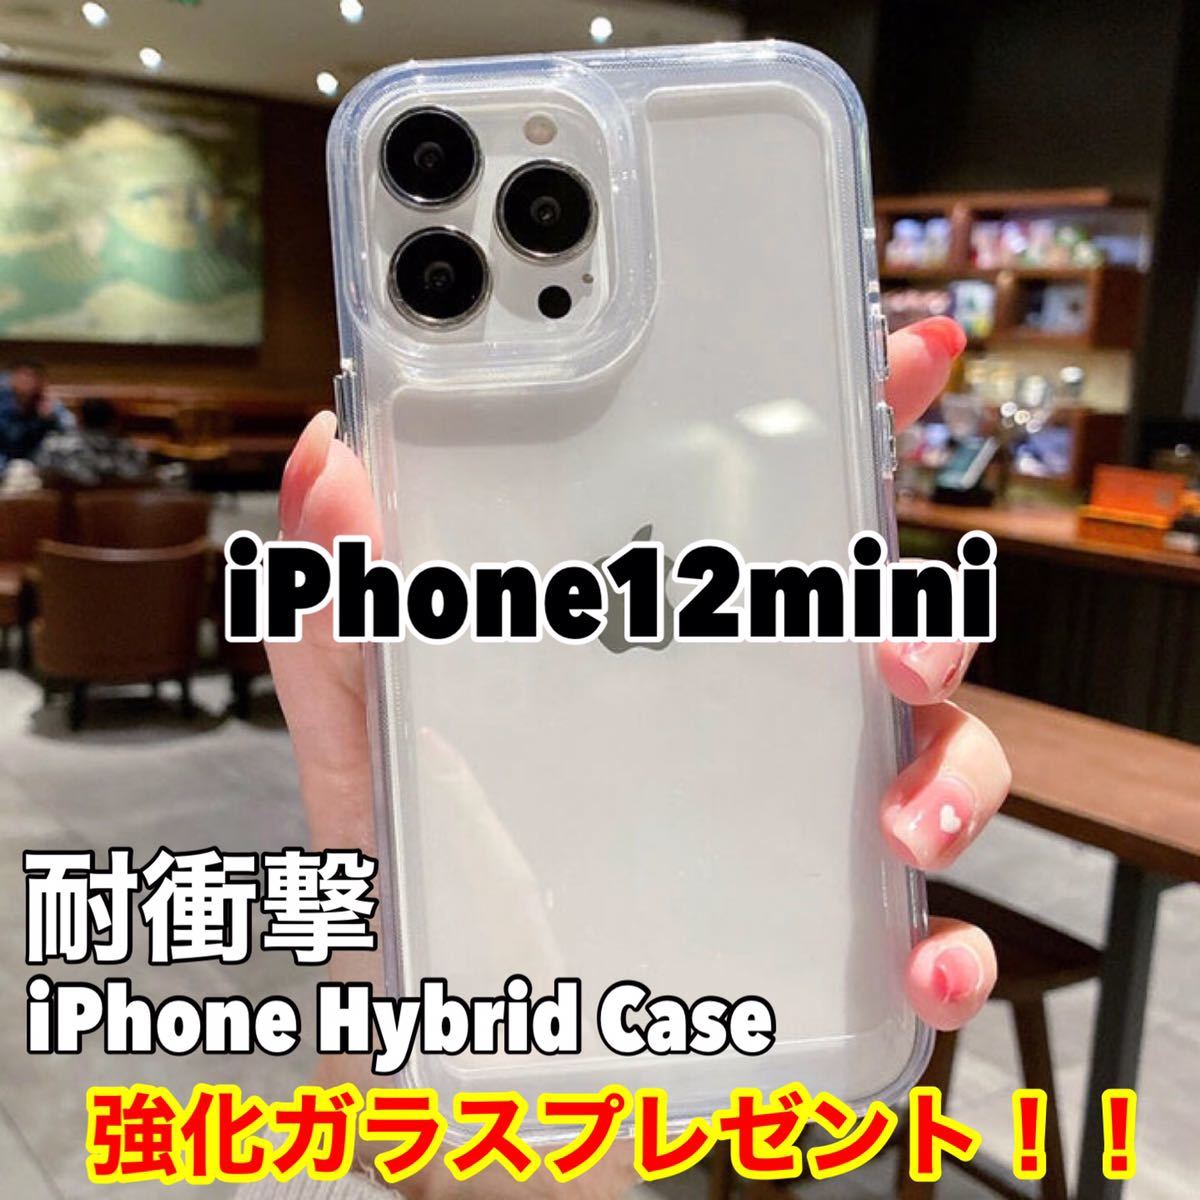 [ strengthen glass attaching ] iPhone12mini iPhone12mini case hybrid case Impact-proof impact absorption TPU case smartphone case iPhone case 